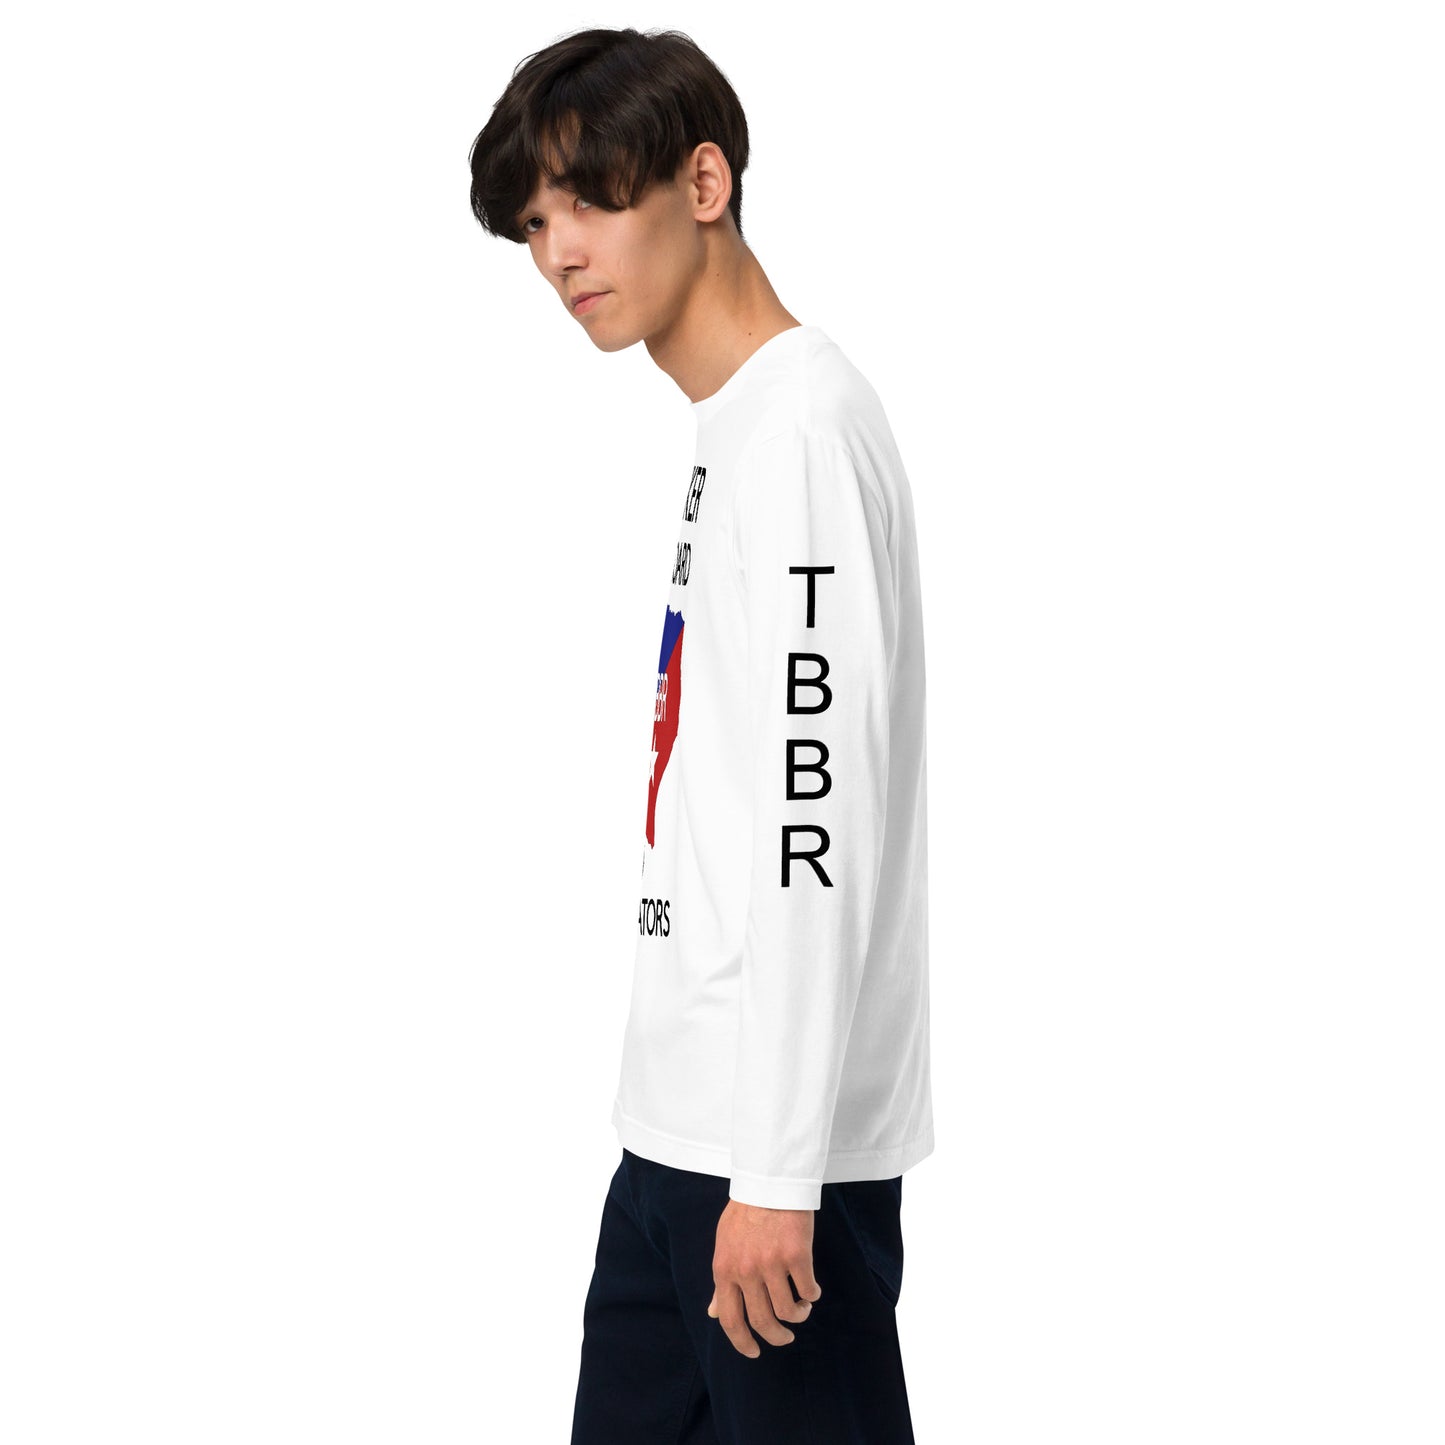 TBBR Long Sleeve Shirt (vertical text)- Unisex